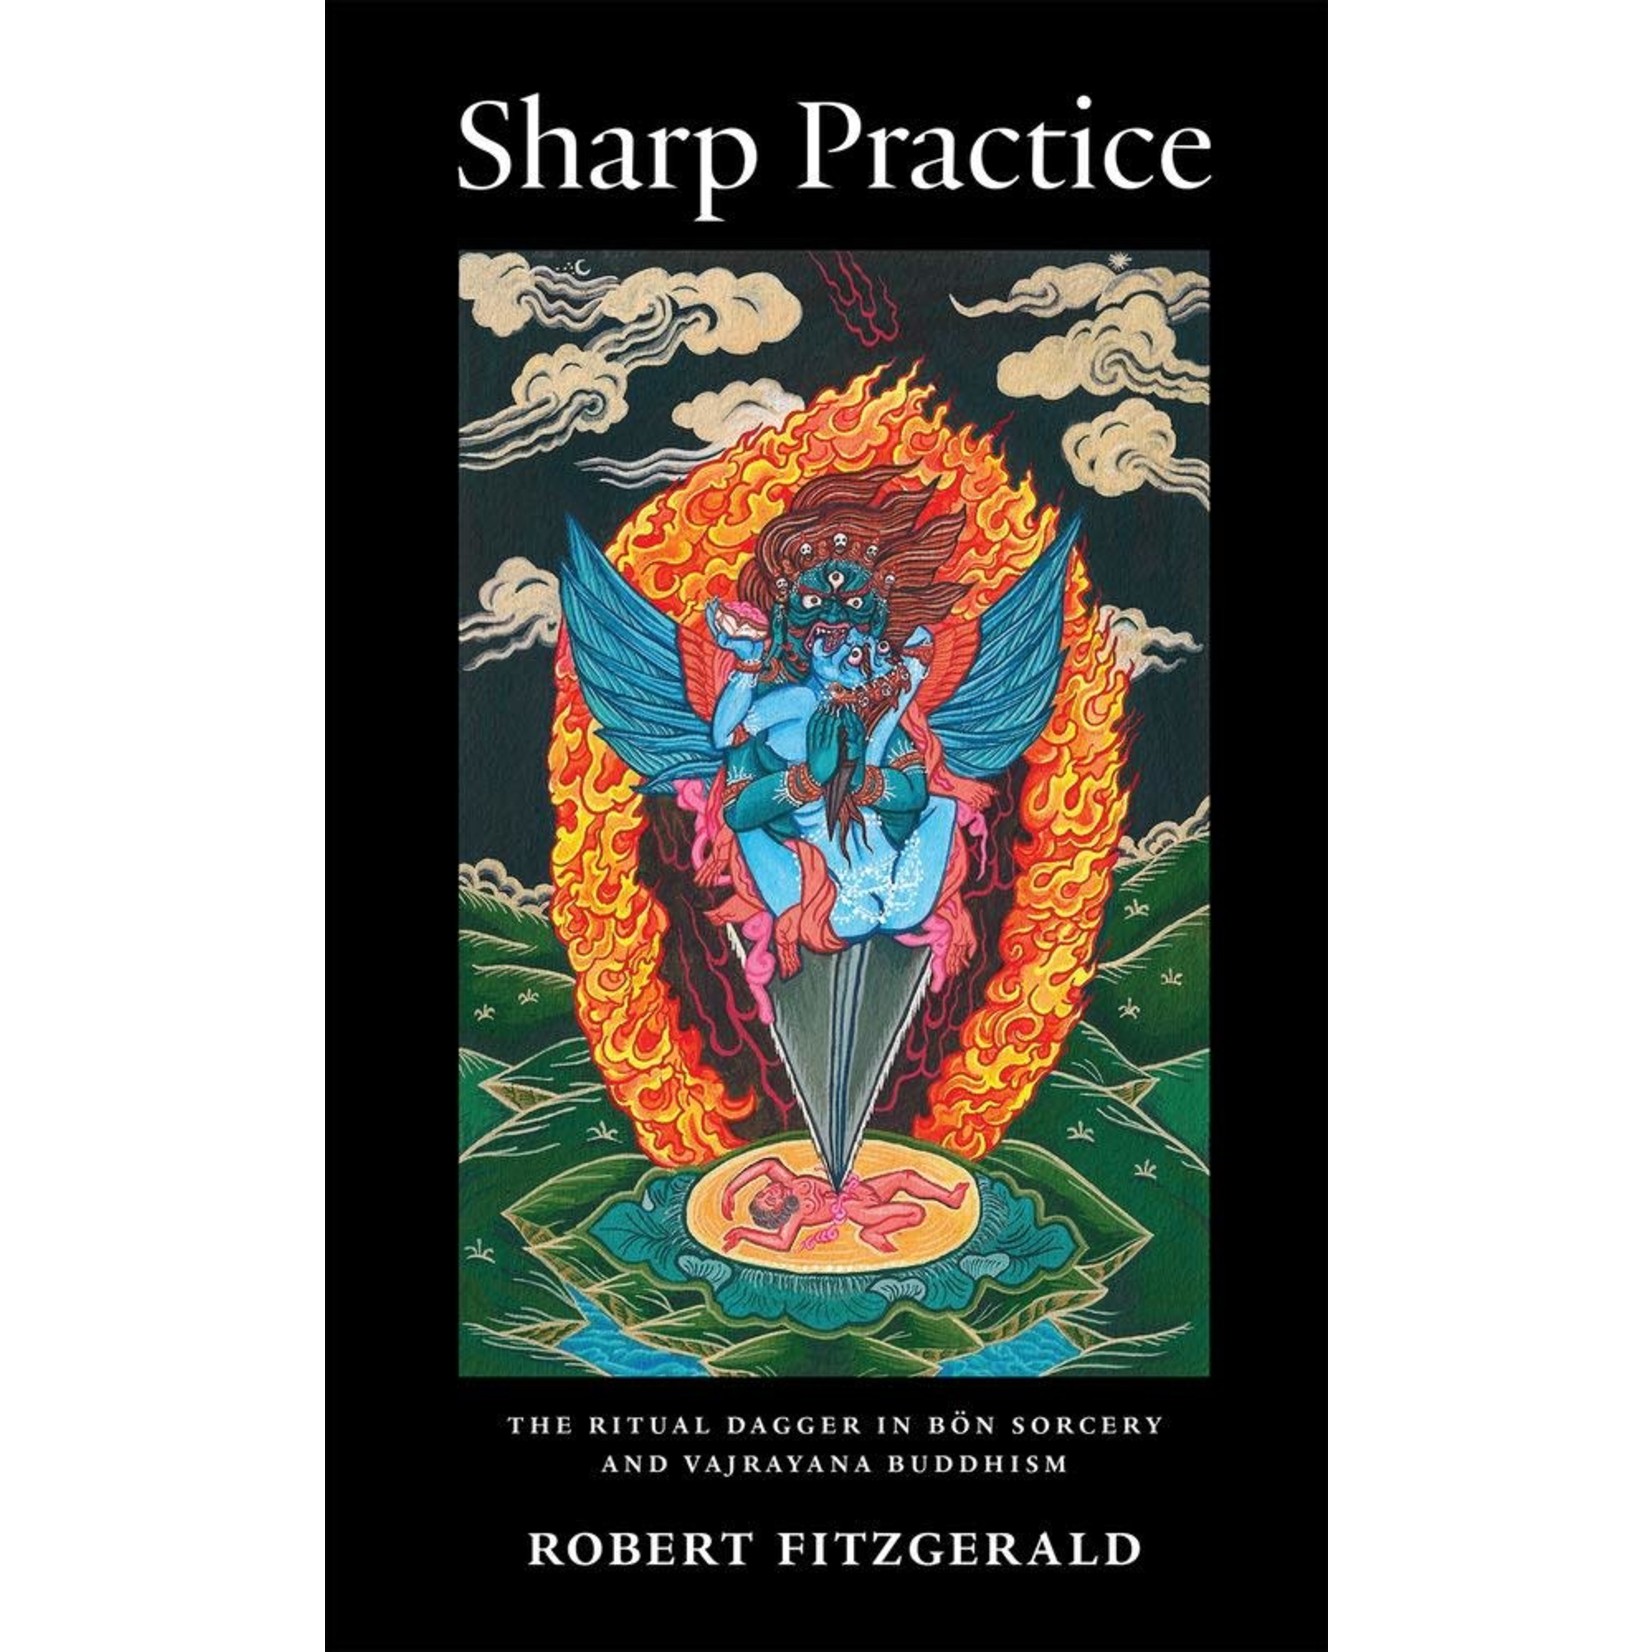 Sharp Practice by Robert Fitzgerald